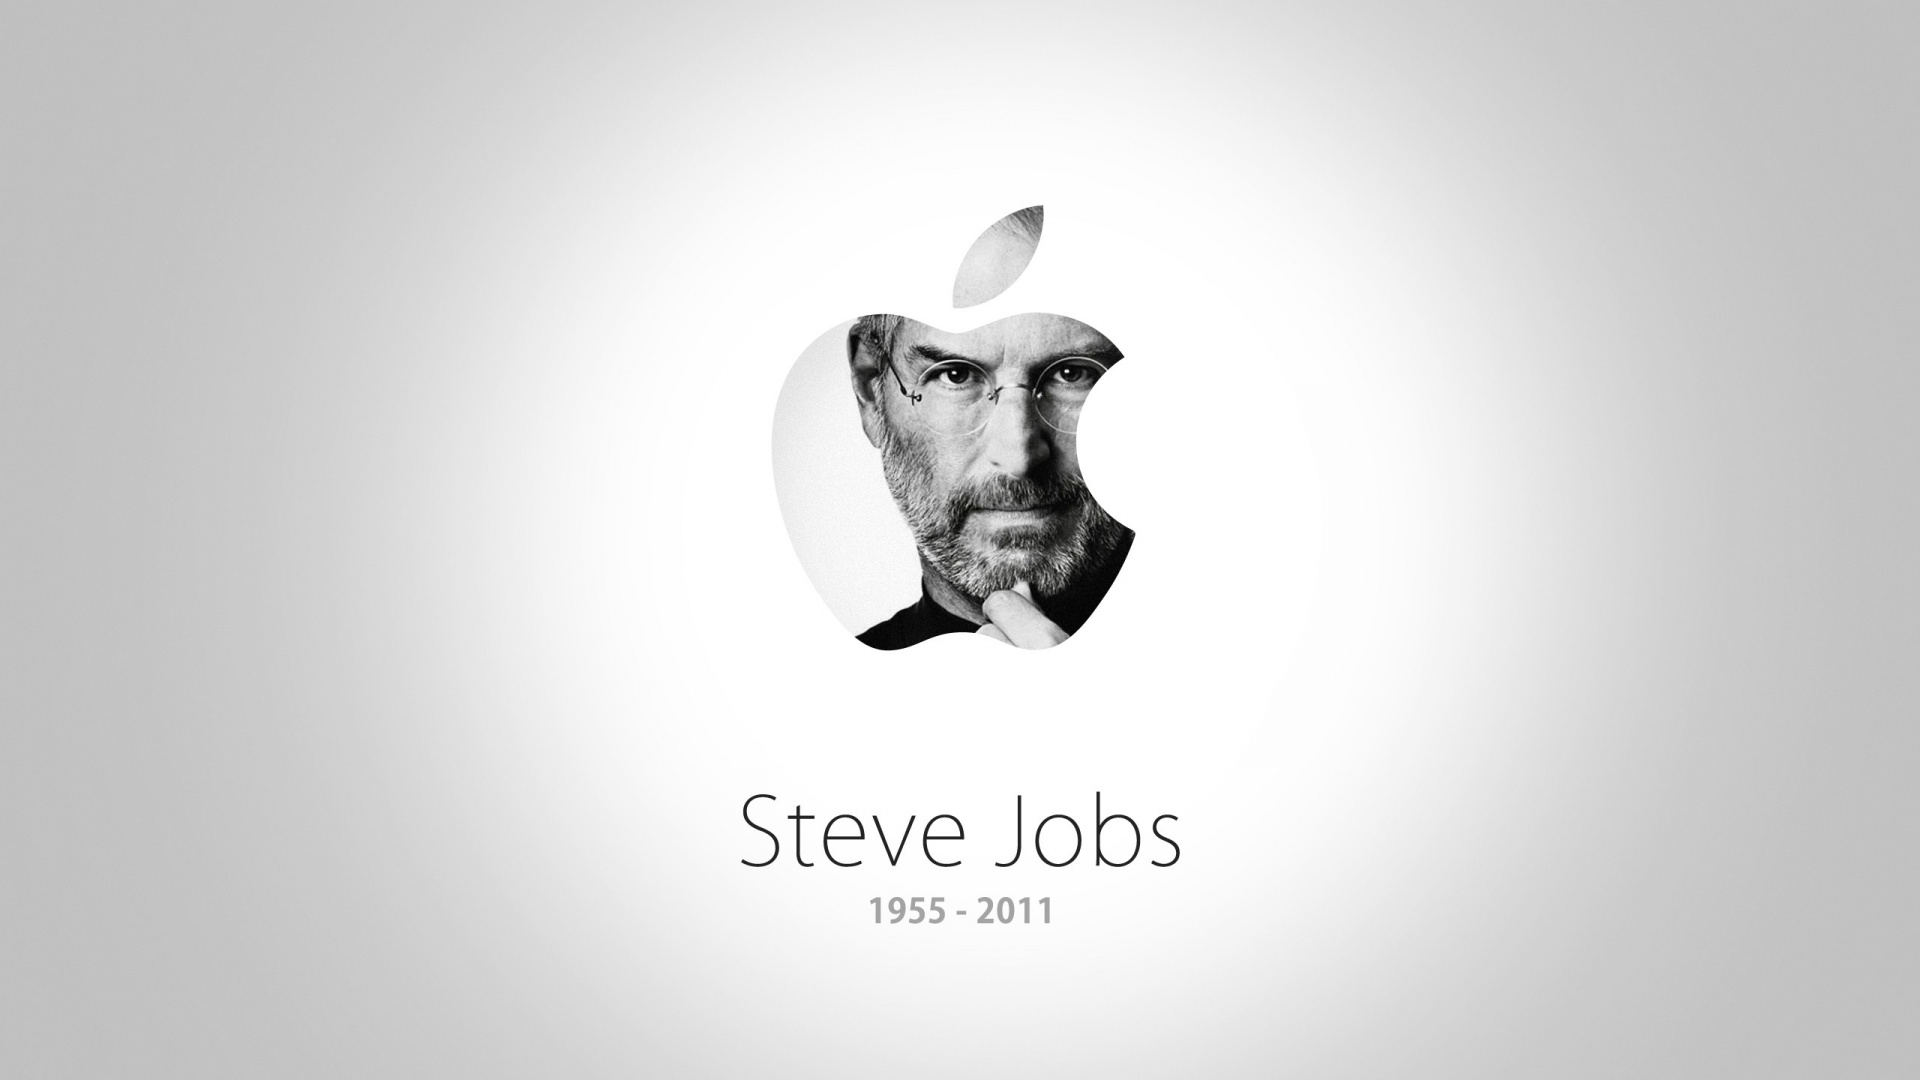 Fonds d'écran Steve Jobs : tous les wallpapers Steve Jobs